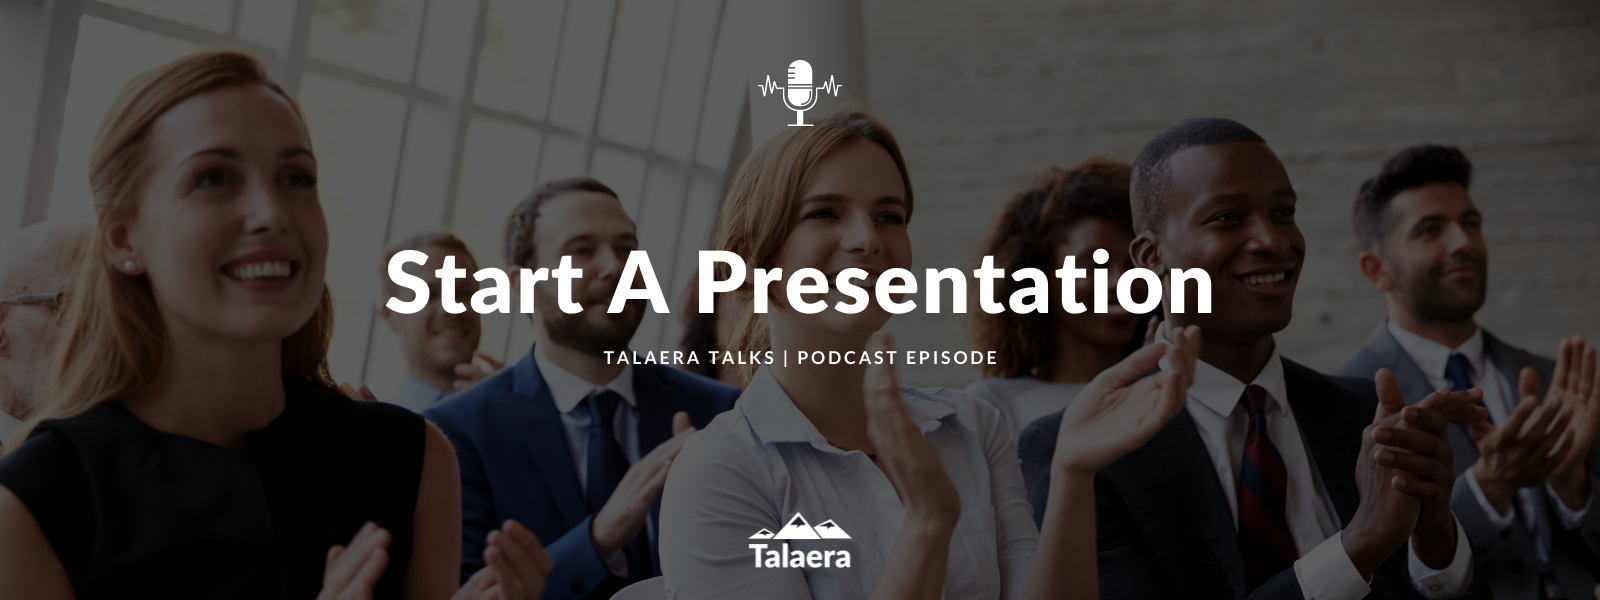 How to start a presentation - Talaera Blog